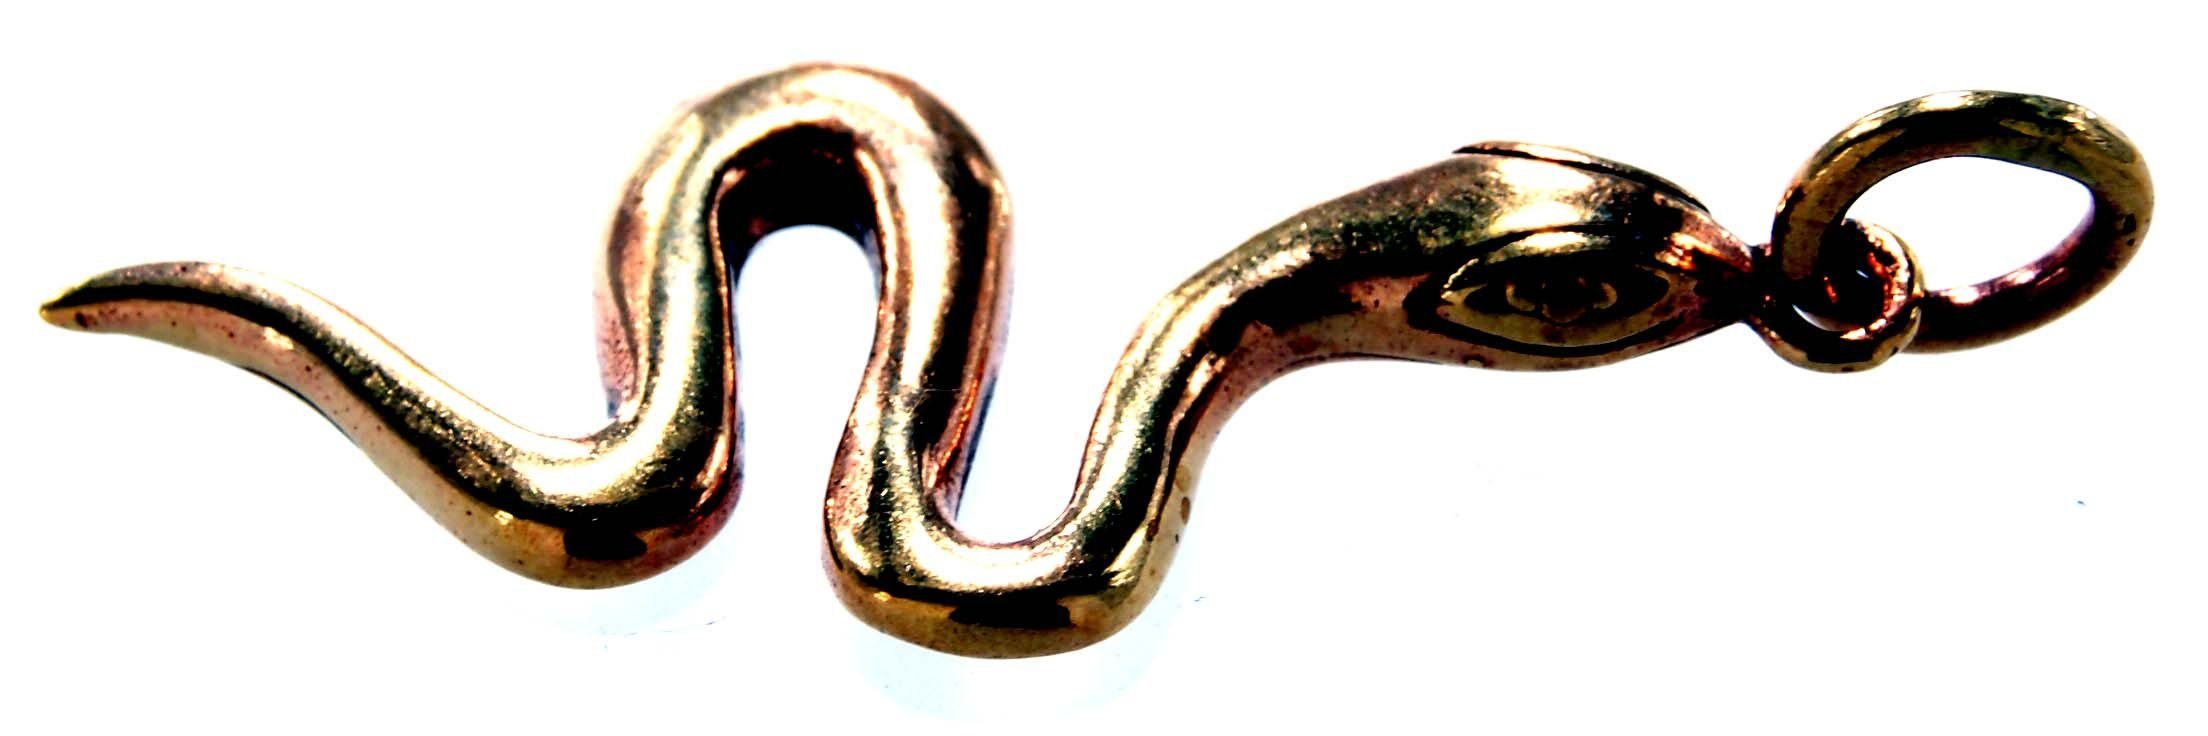 Kiss of Anhänger Kette chlangen Leather Schlange Kettenanhänger Gothic Snake Bronze Metal